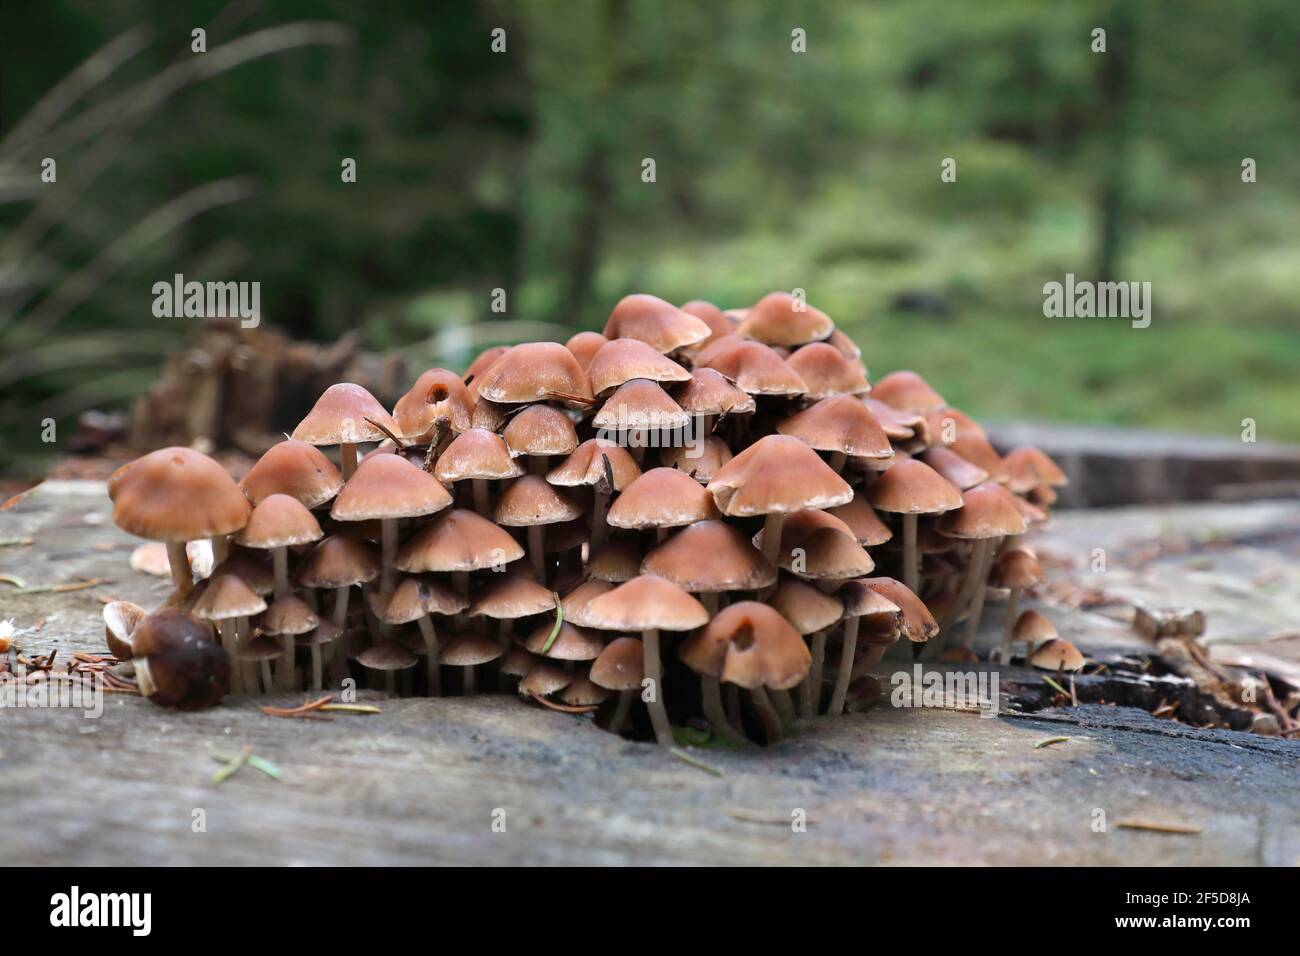 Common stump brittlestem (Psathyrella piluliformis, Psathyrelle hydrophila), several fruiting bodies on a tree snag, Germany, Saxony Stock Photo